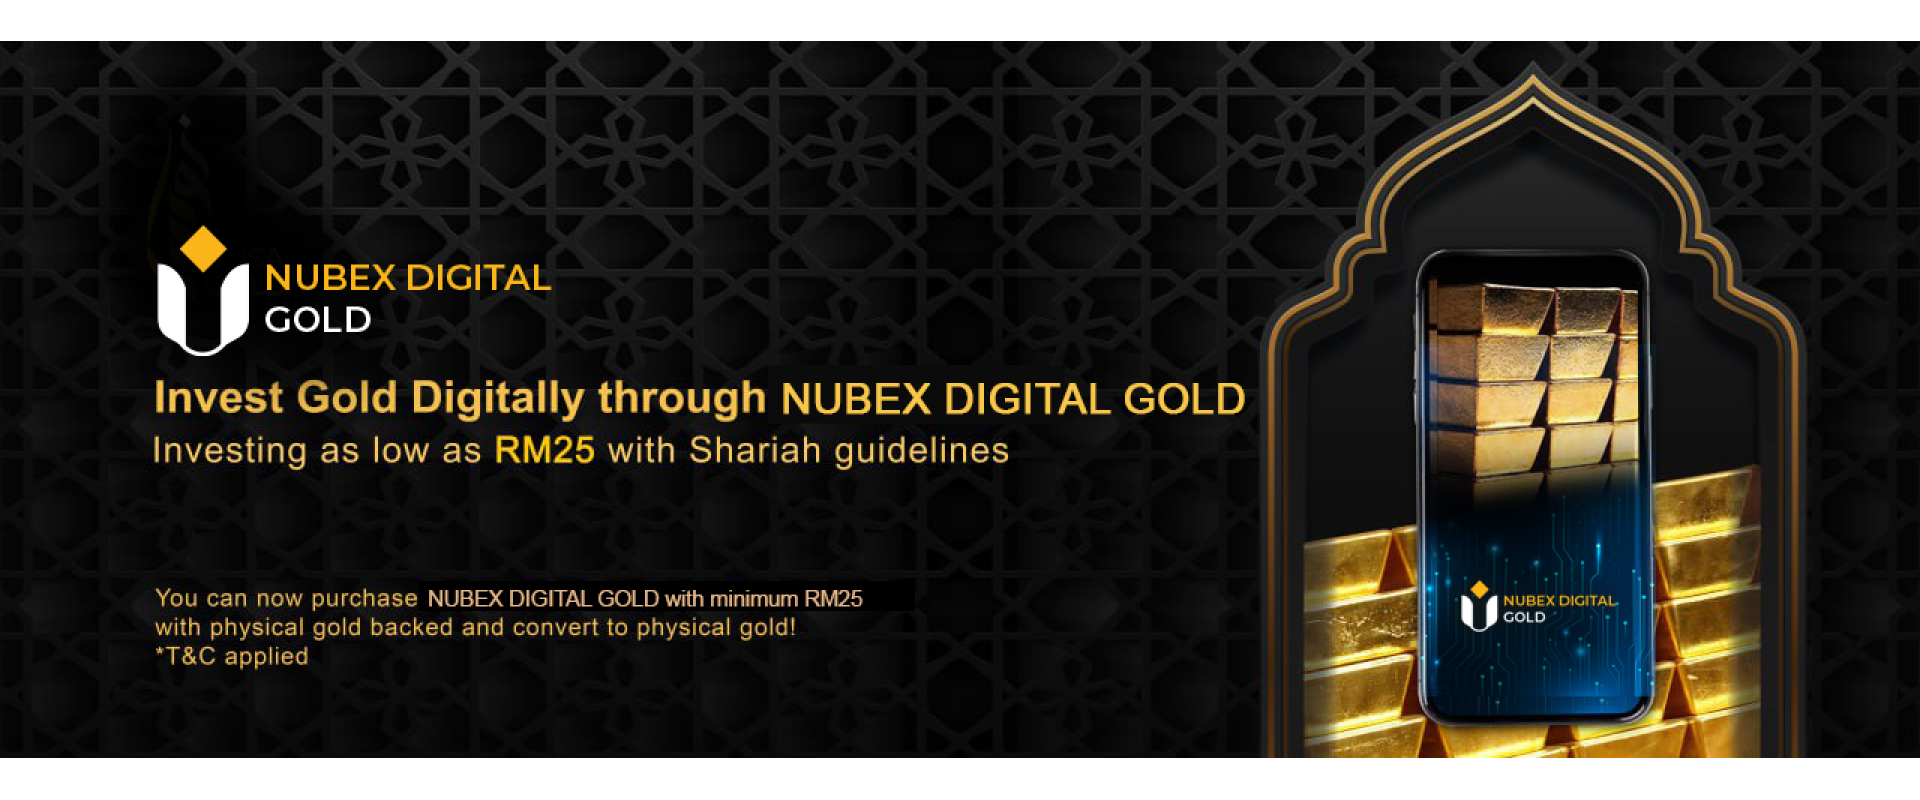 Nubex Digital